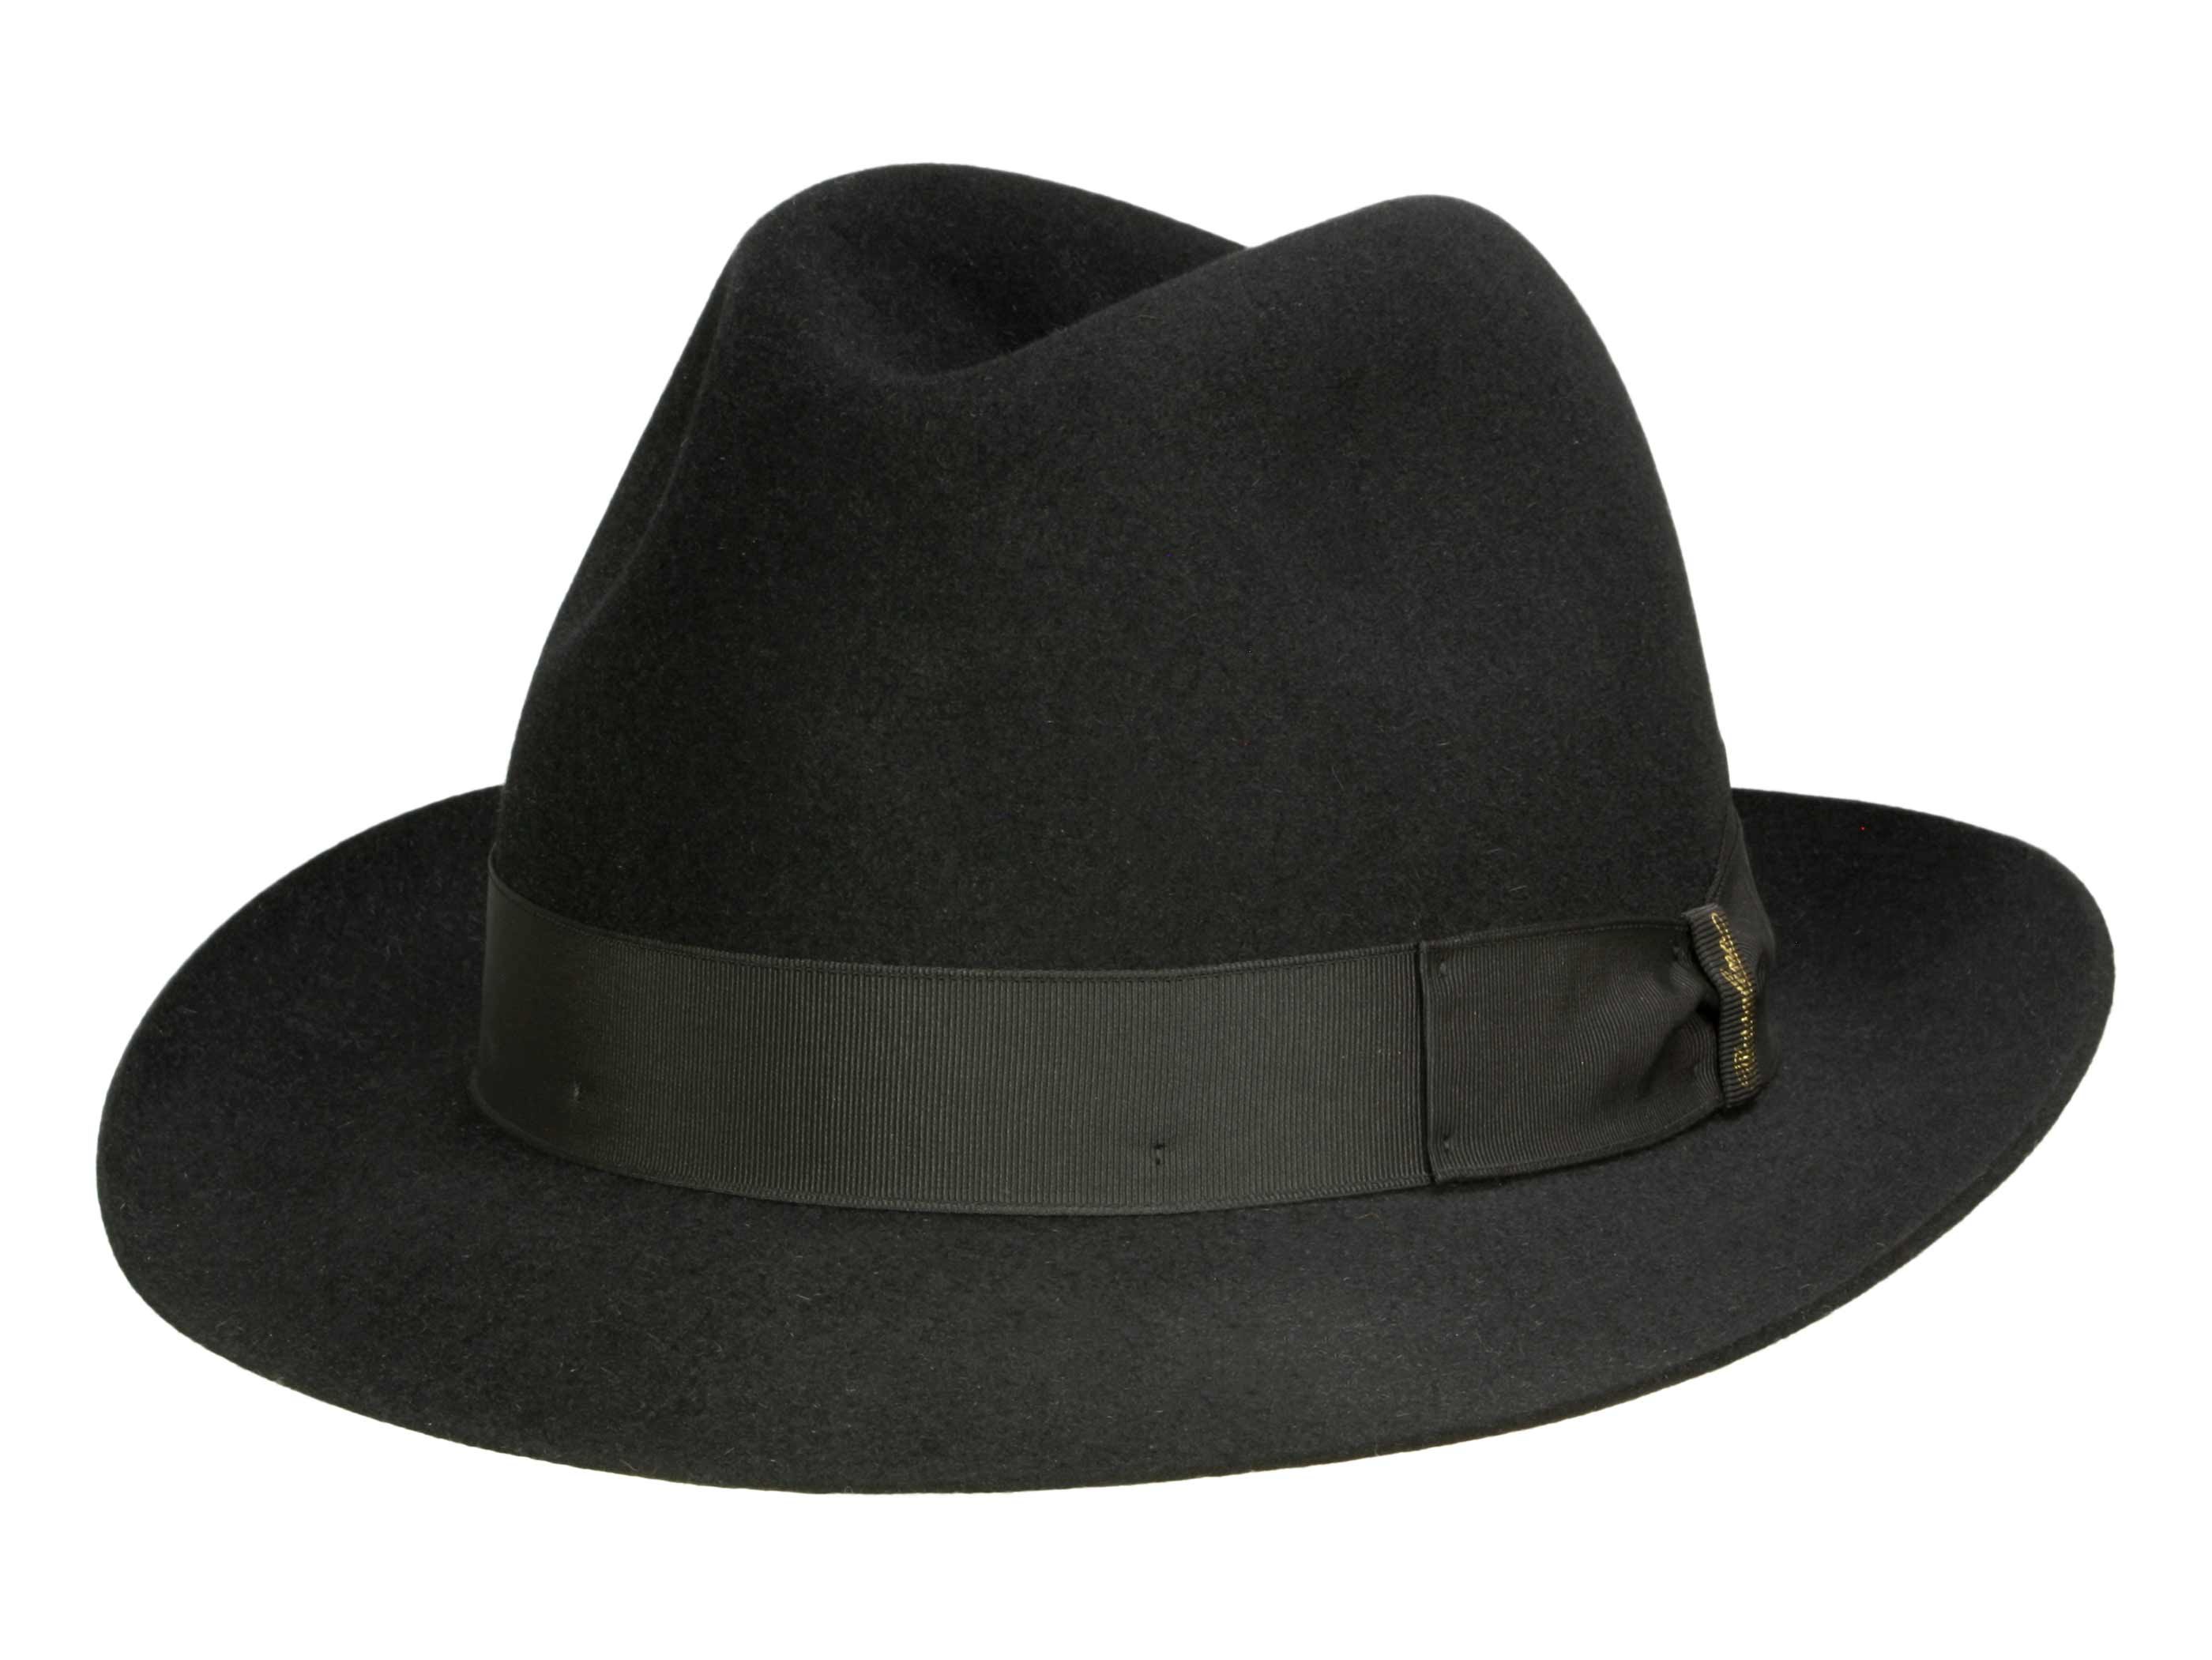 Муж шляпа. Шляпа Федора Борсалино. Шляпа Fedora Trilby. Шляпы мужские Borsalino. Шляпа Борсалино мужская.